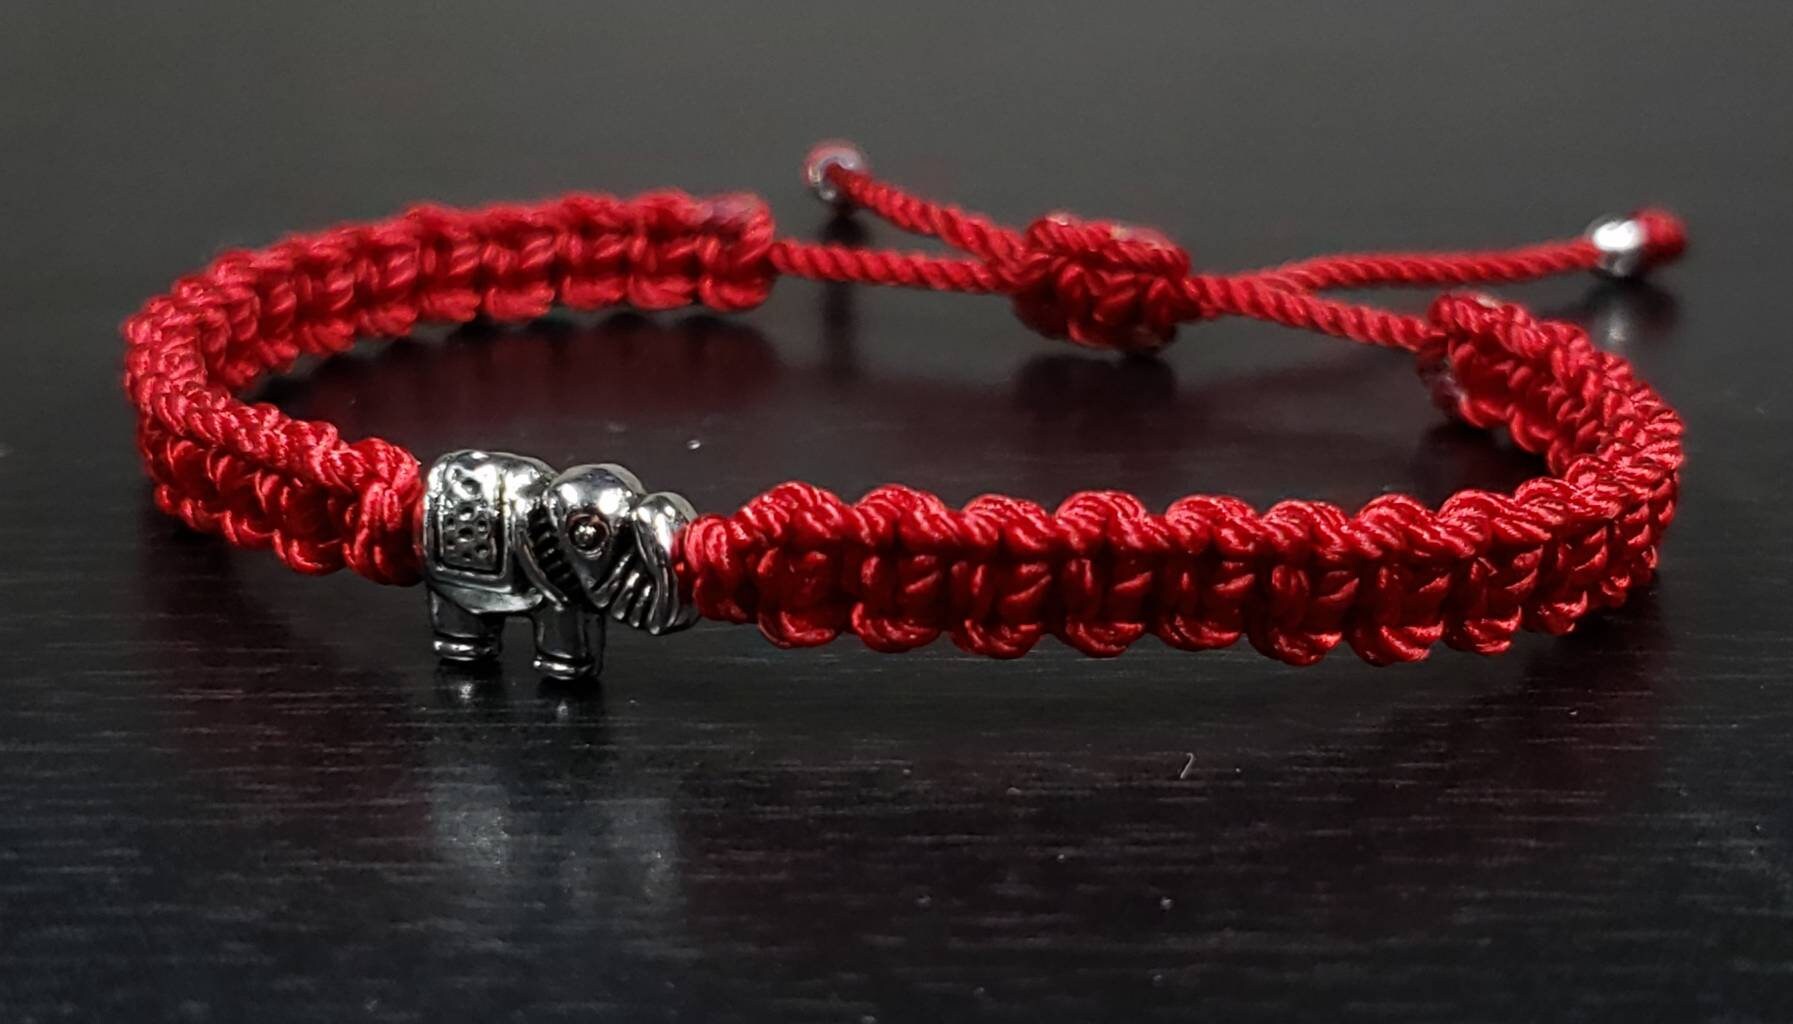 Gold Elephant Charm Red String Protection Bracelet